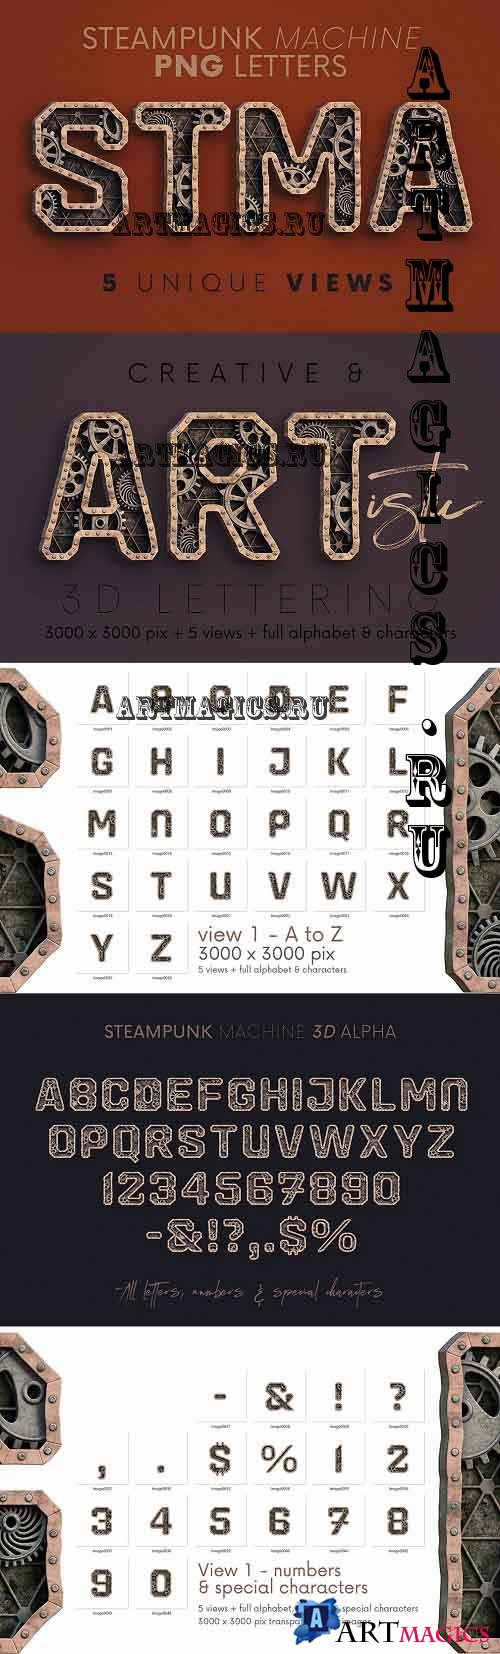 Steampunk Machine - 3D Lettering - 7050440